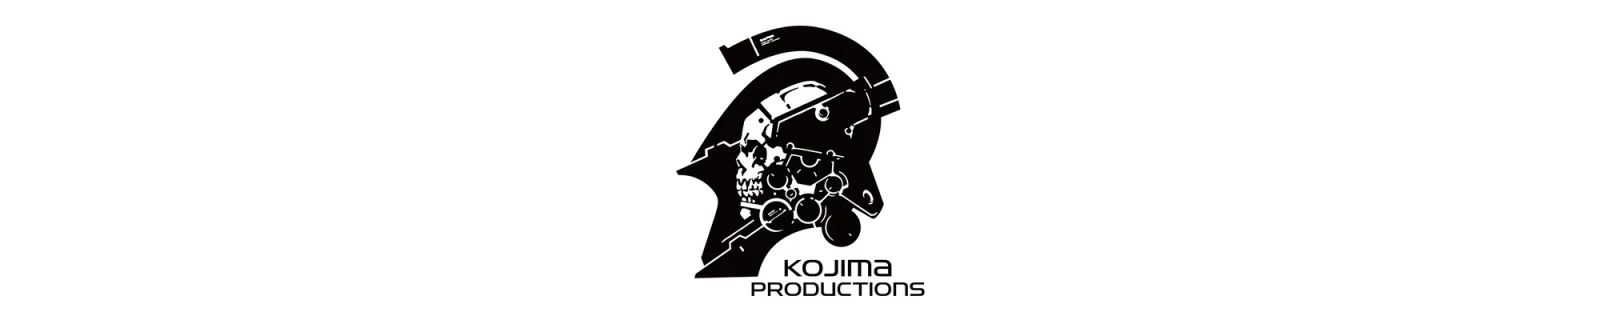 Kojima Productions全身像LOGO公开